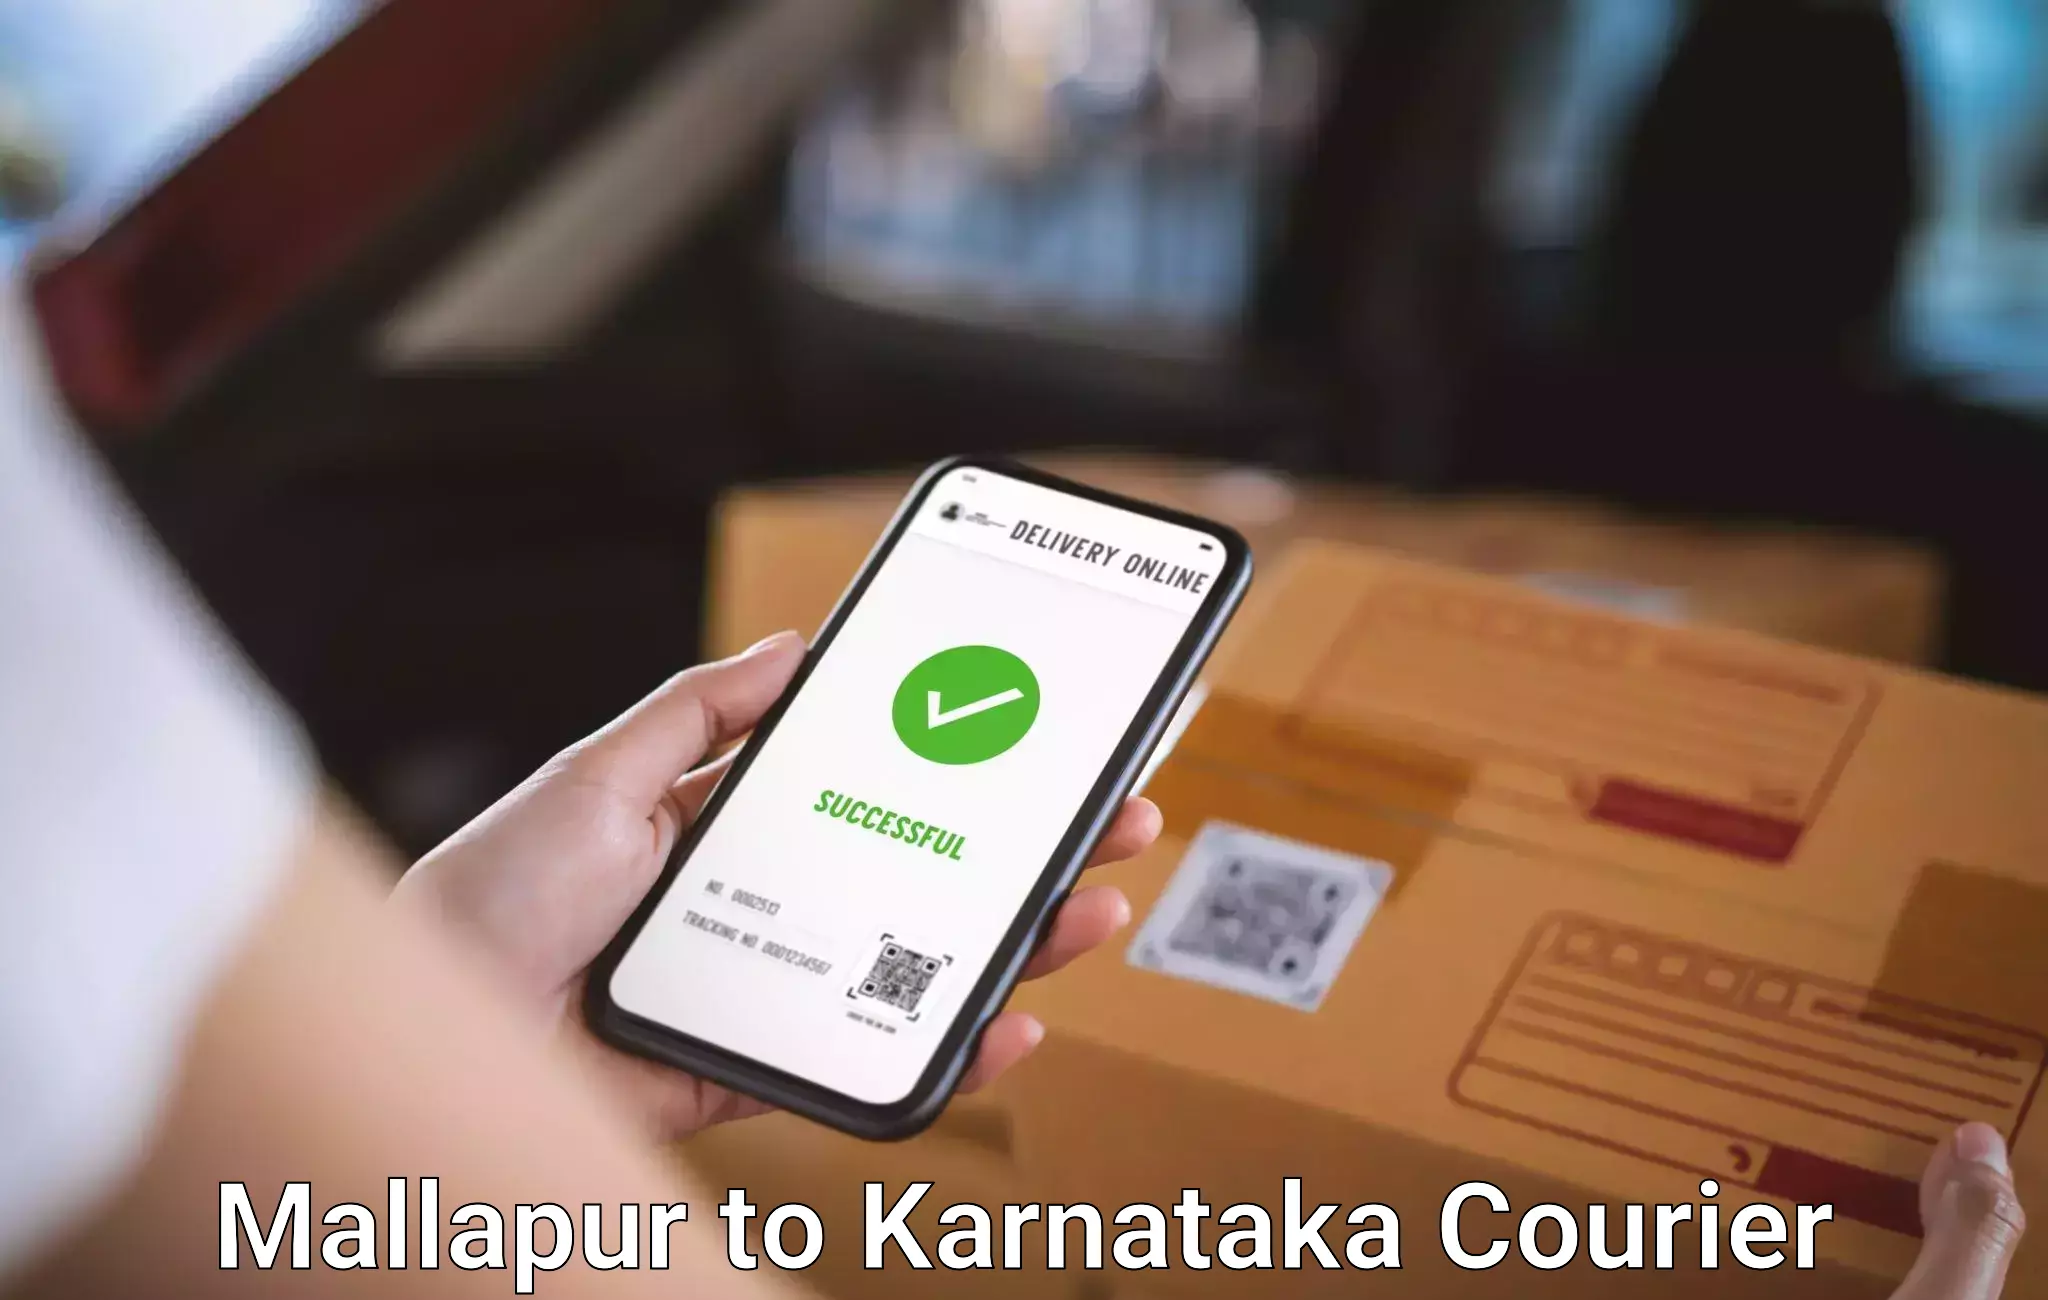 Luggage shipping specialists Mallapur to Karnataka